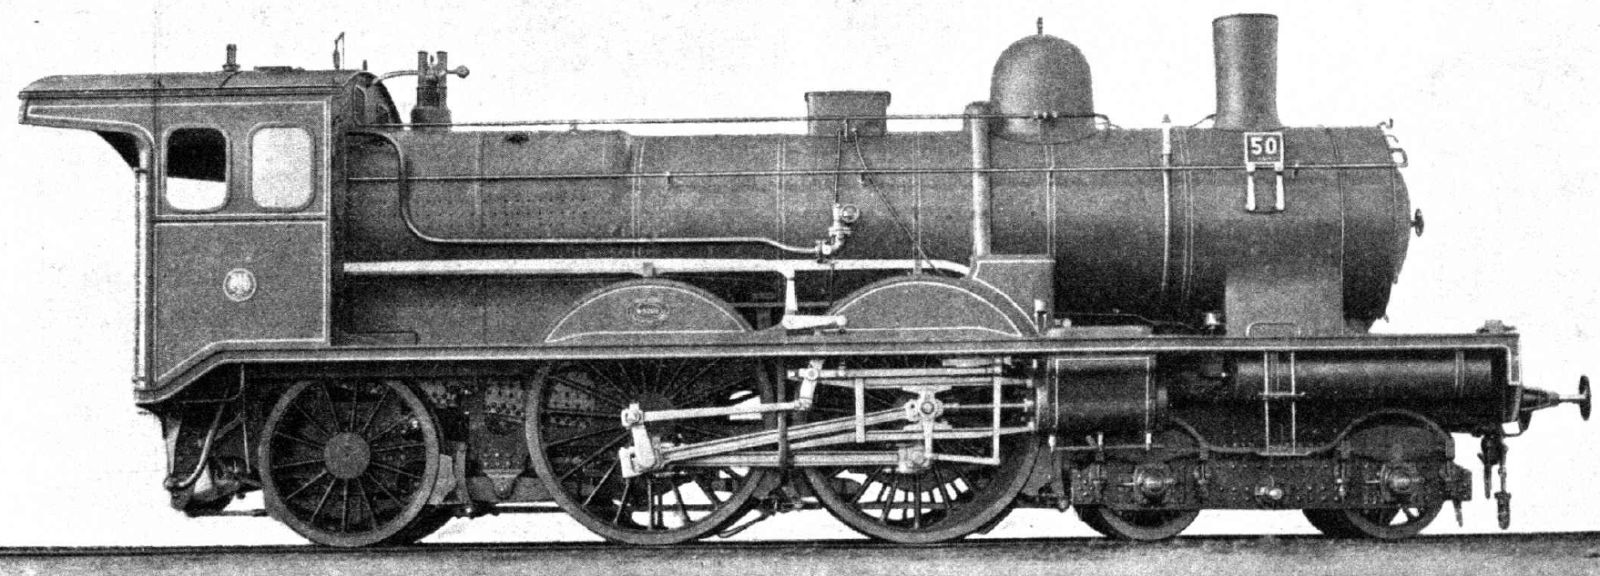 De Glehn type, 1903 variant with elongated firebox